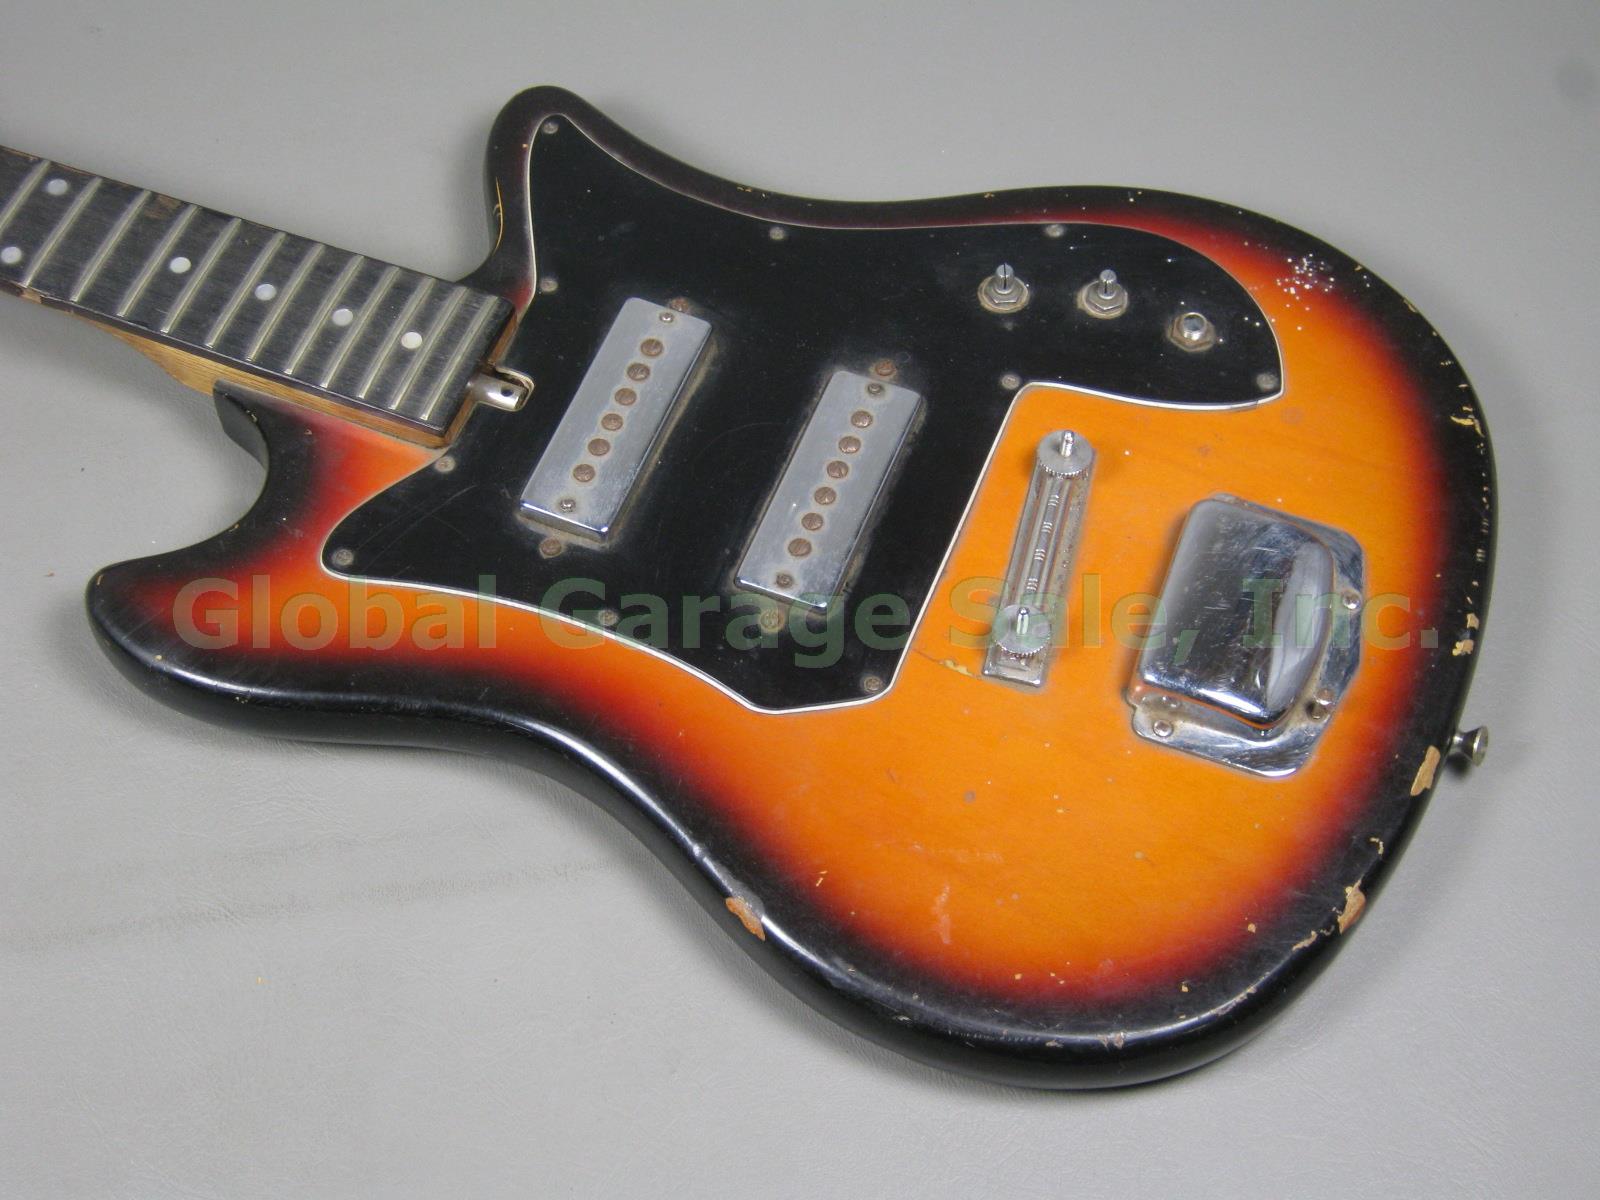 Vtg Harmony Electric Guitar MIJ? Japan? Lawsuit Era? As-Is For Parts Or Repair 1